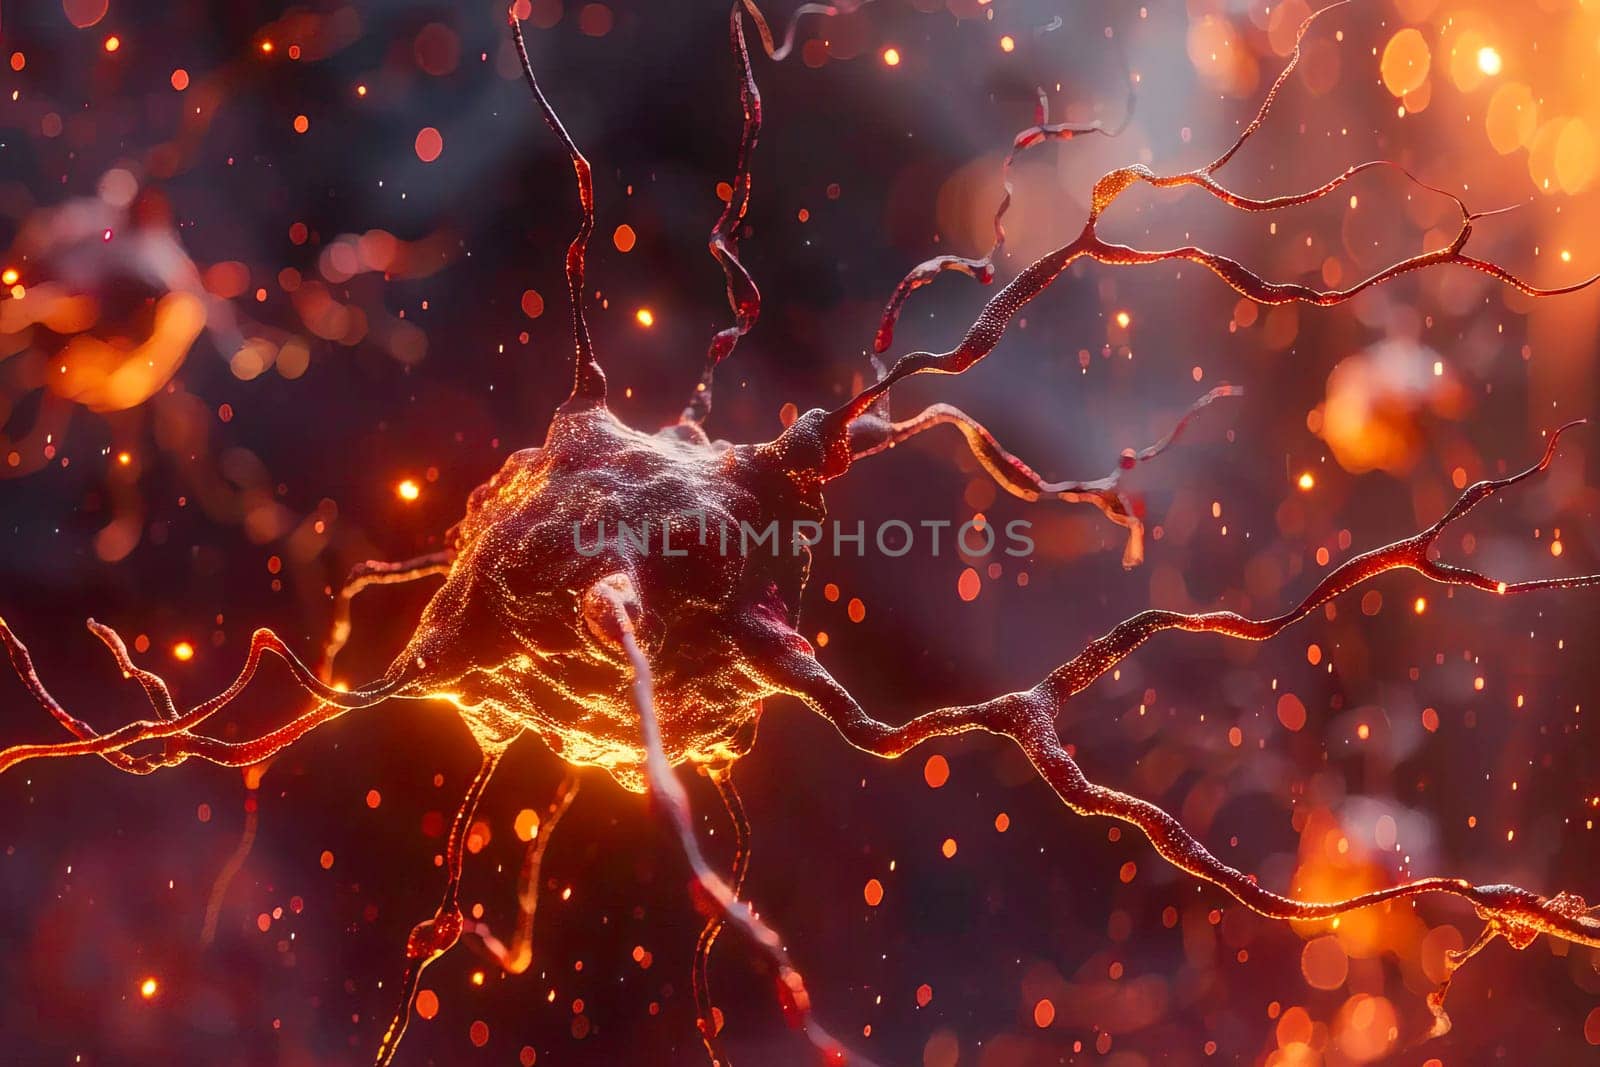 Neurons firing in the human brain.